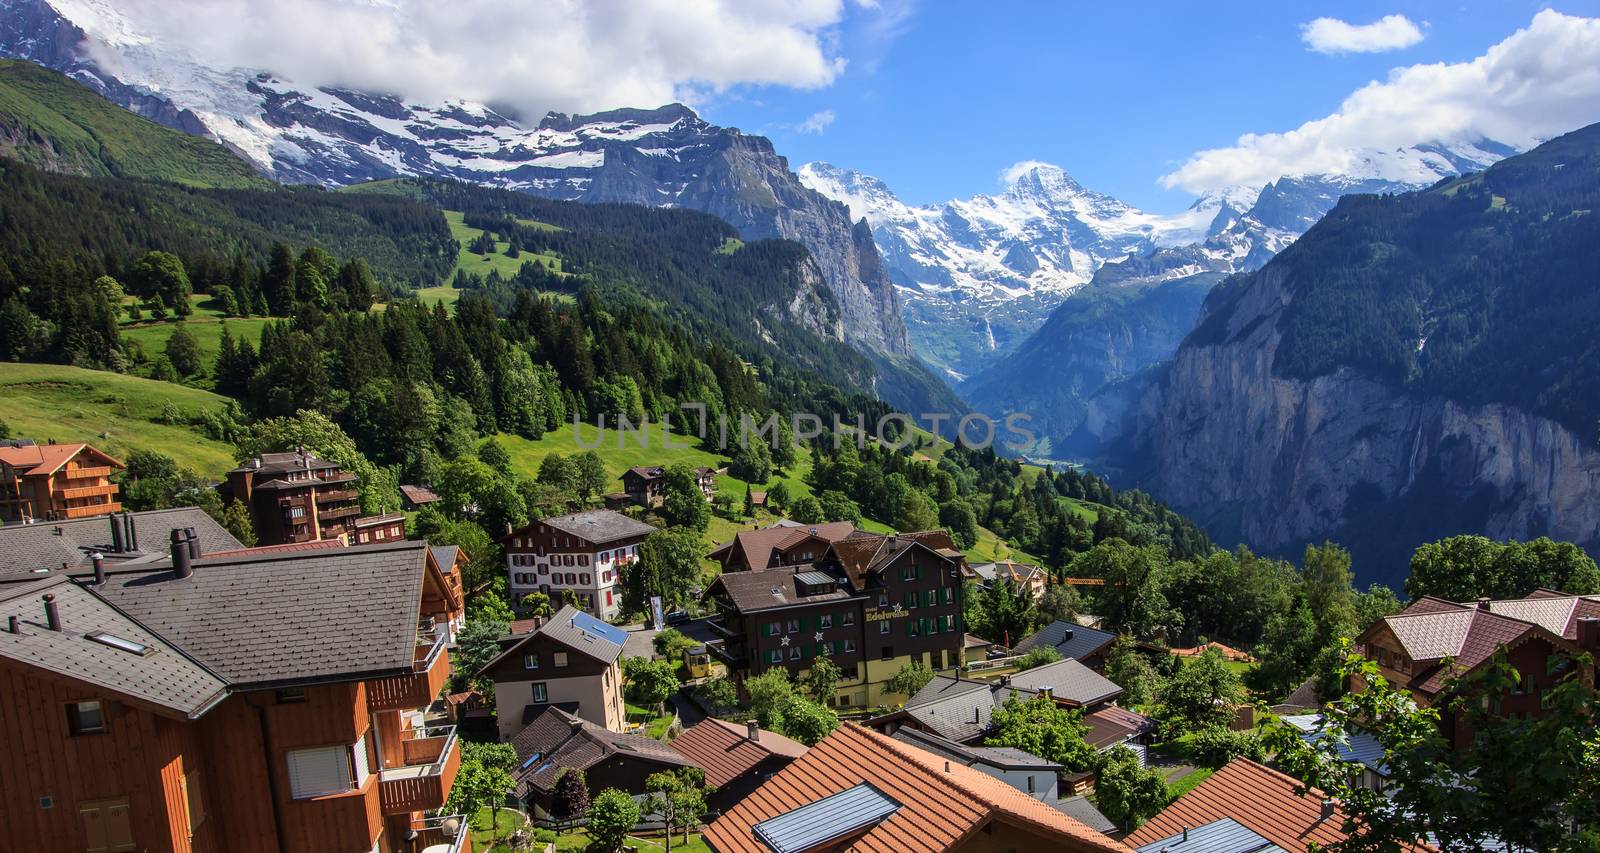 View of Wengen town, Jungfrau and Lauterbrunnen valley, Switzerland